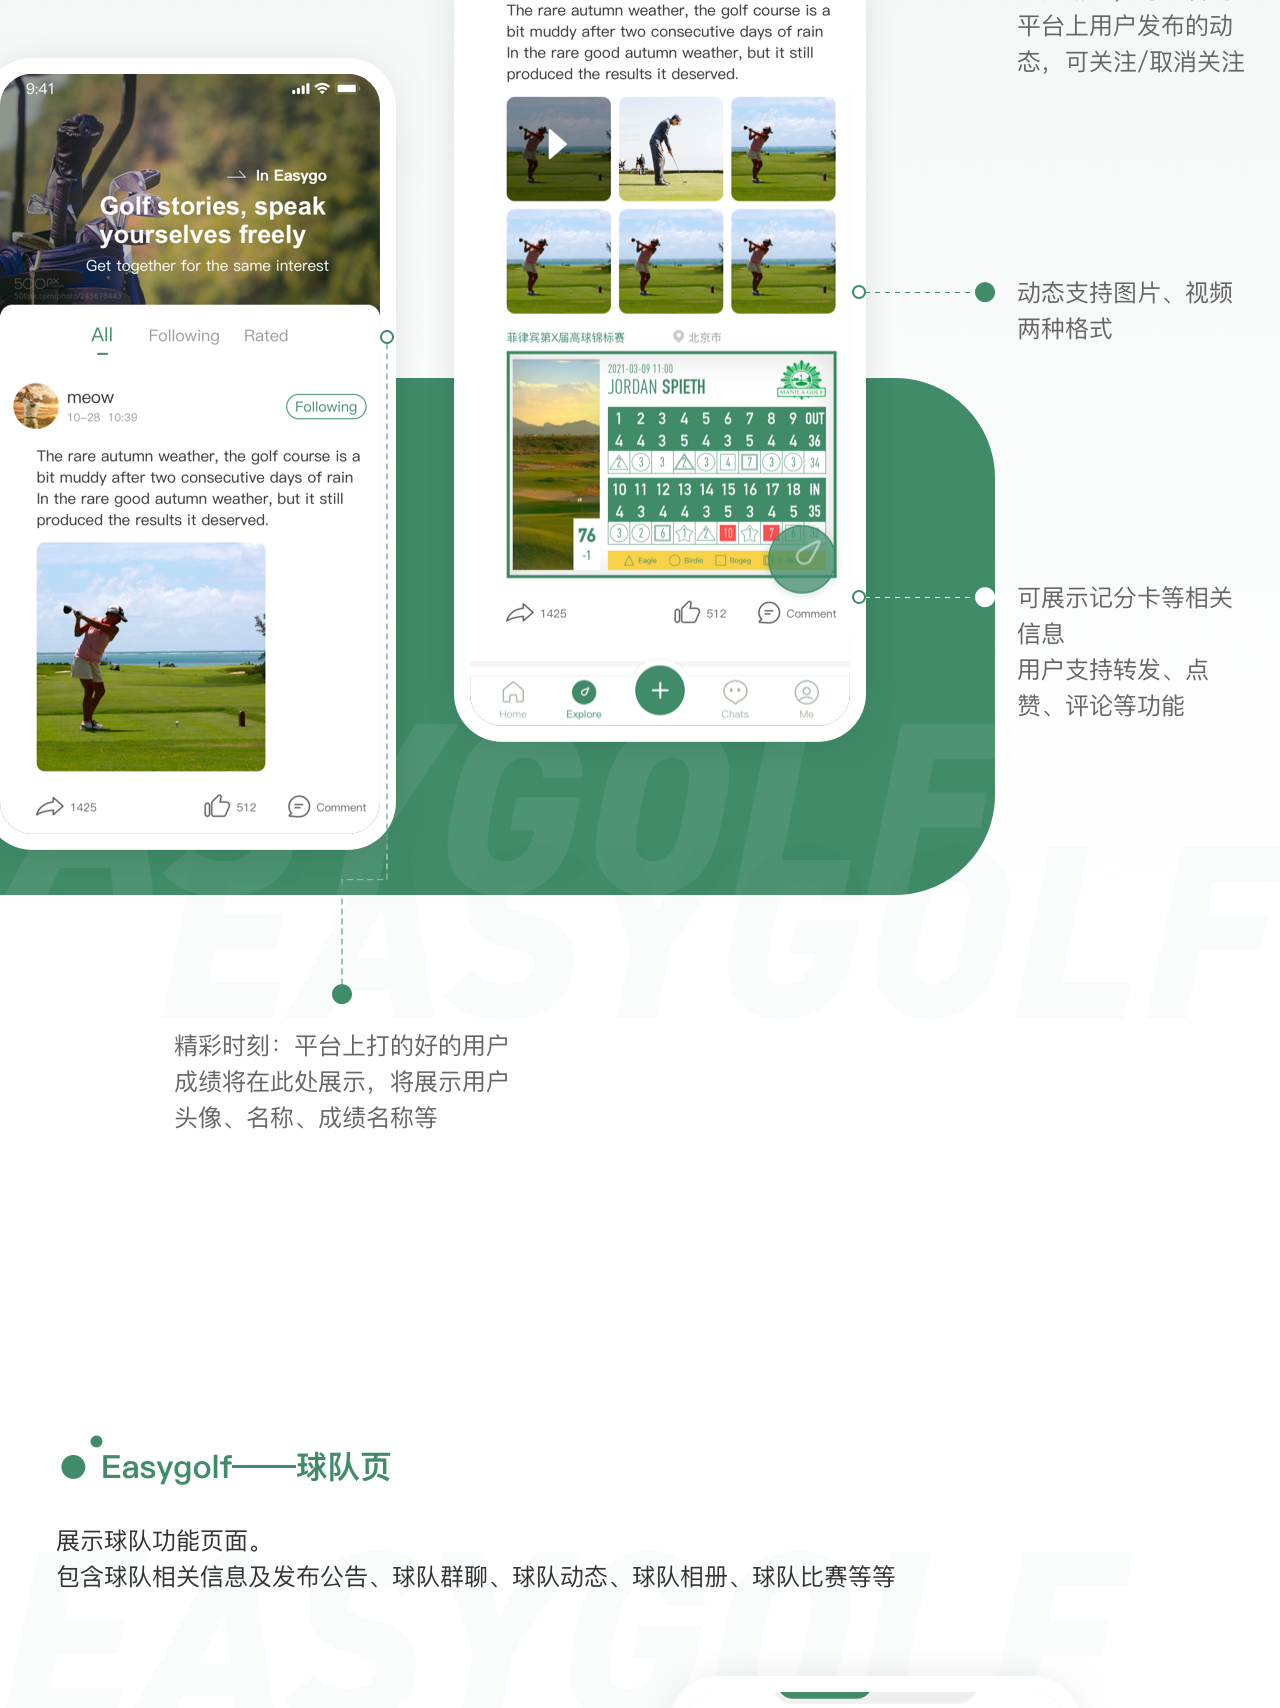 Easygolf Golf Online APP